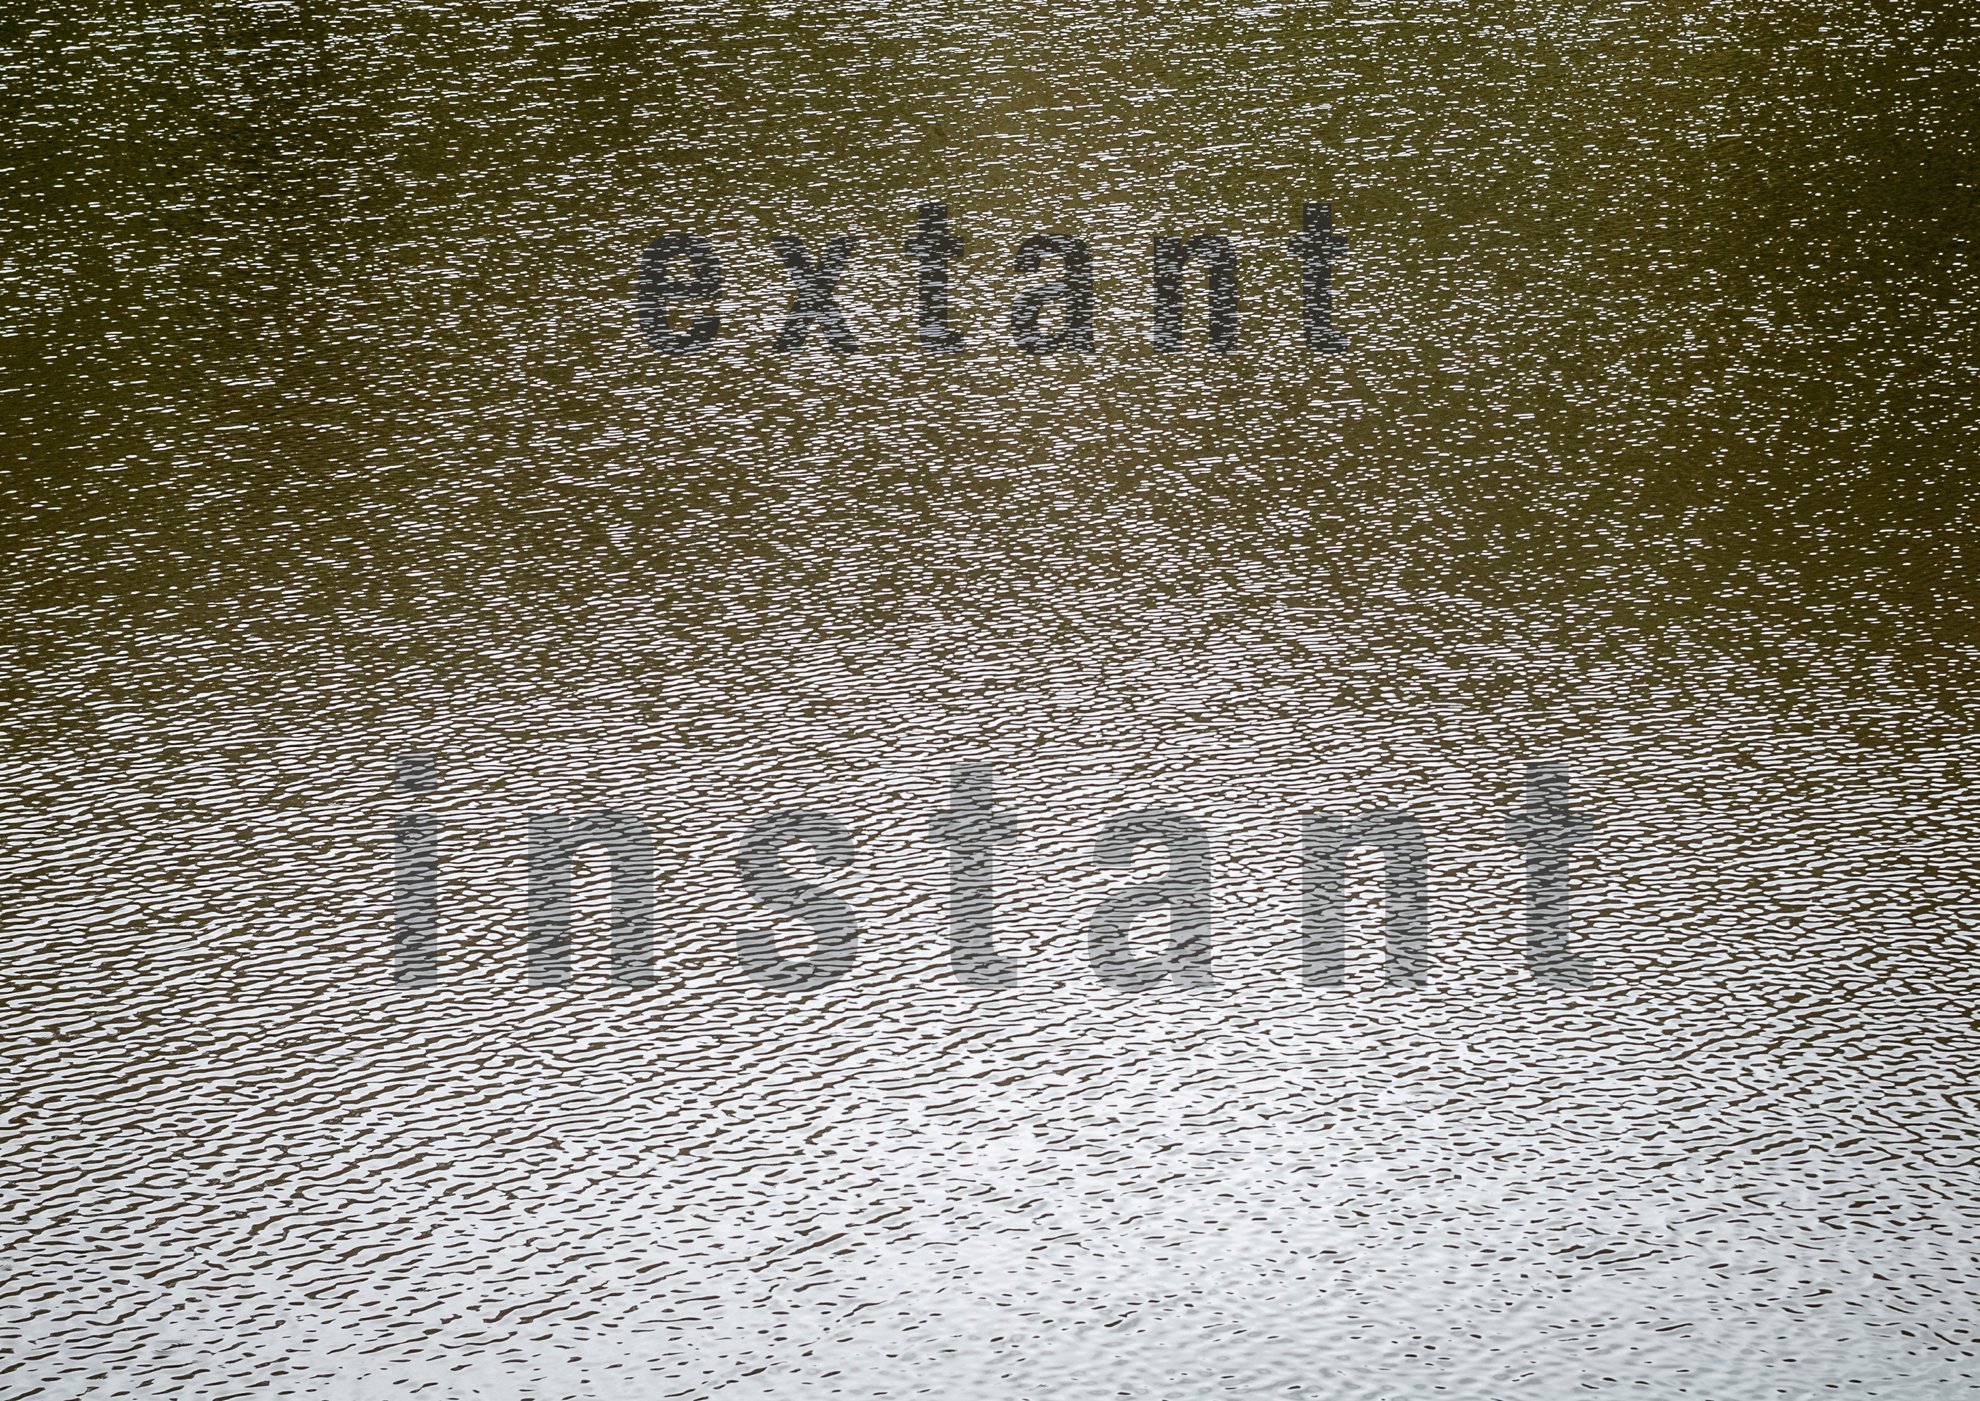 "Extant Instant"